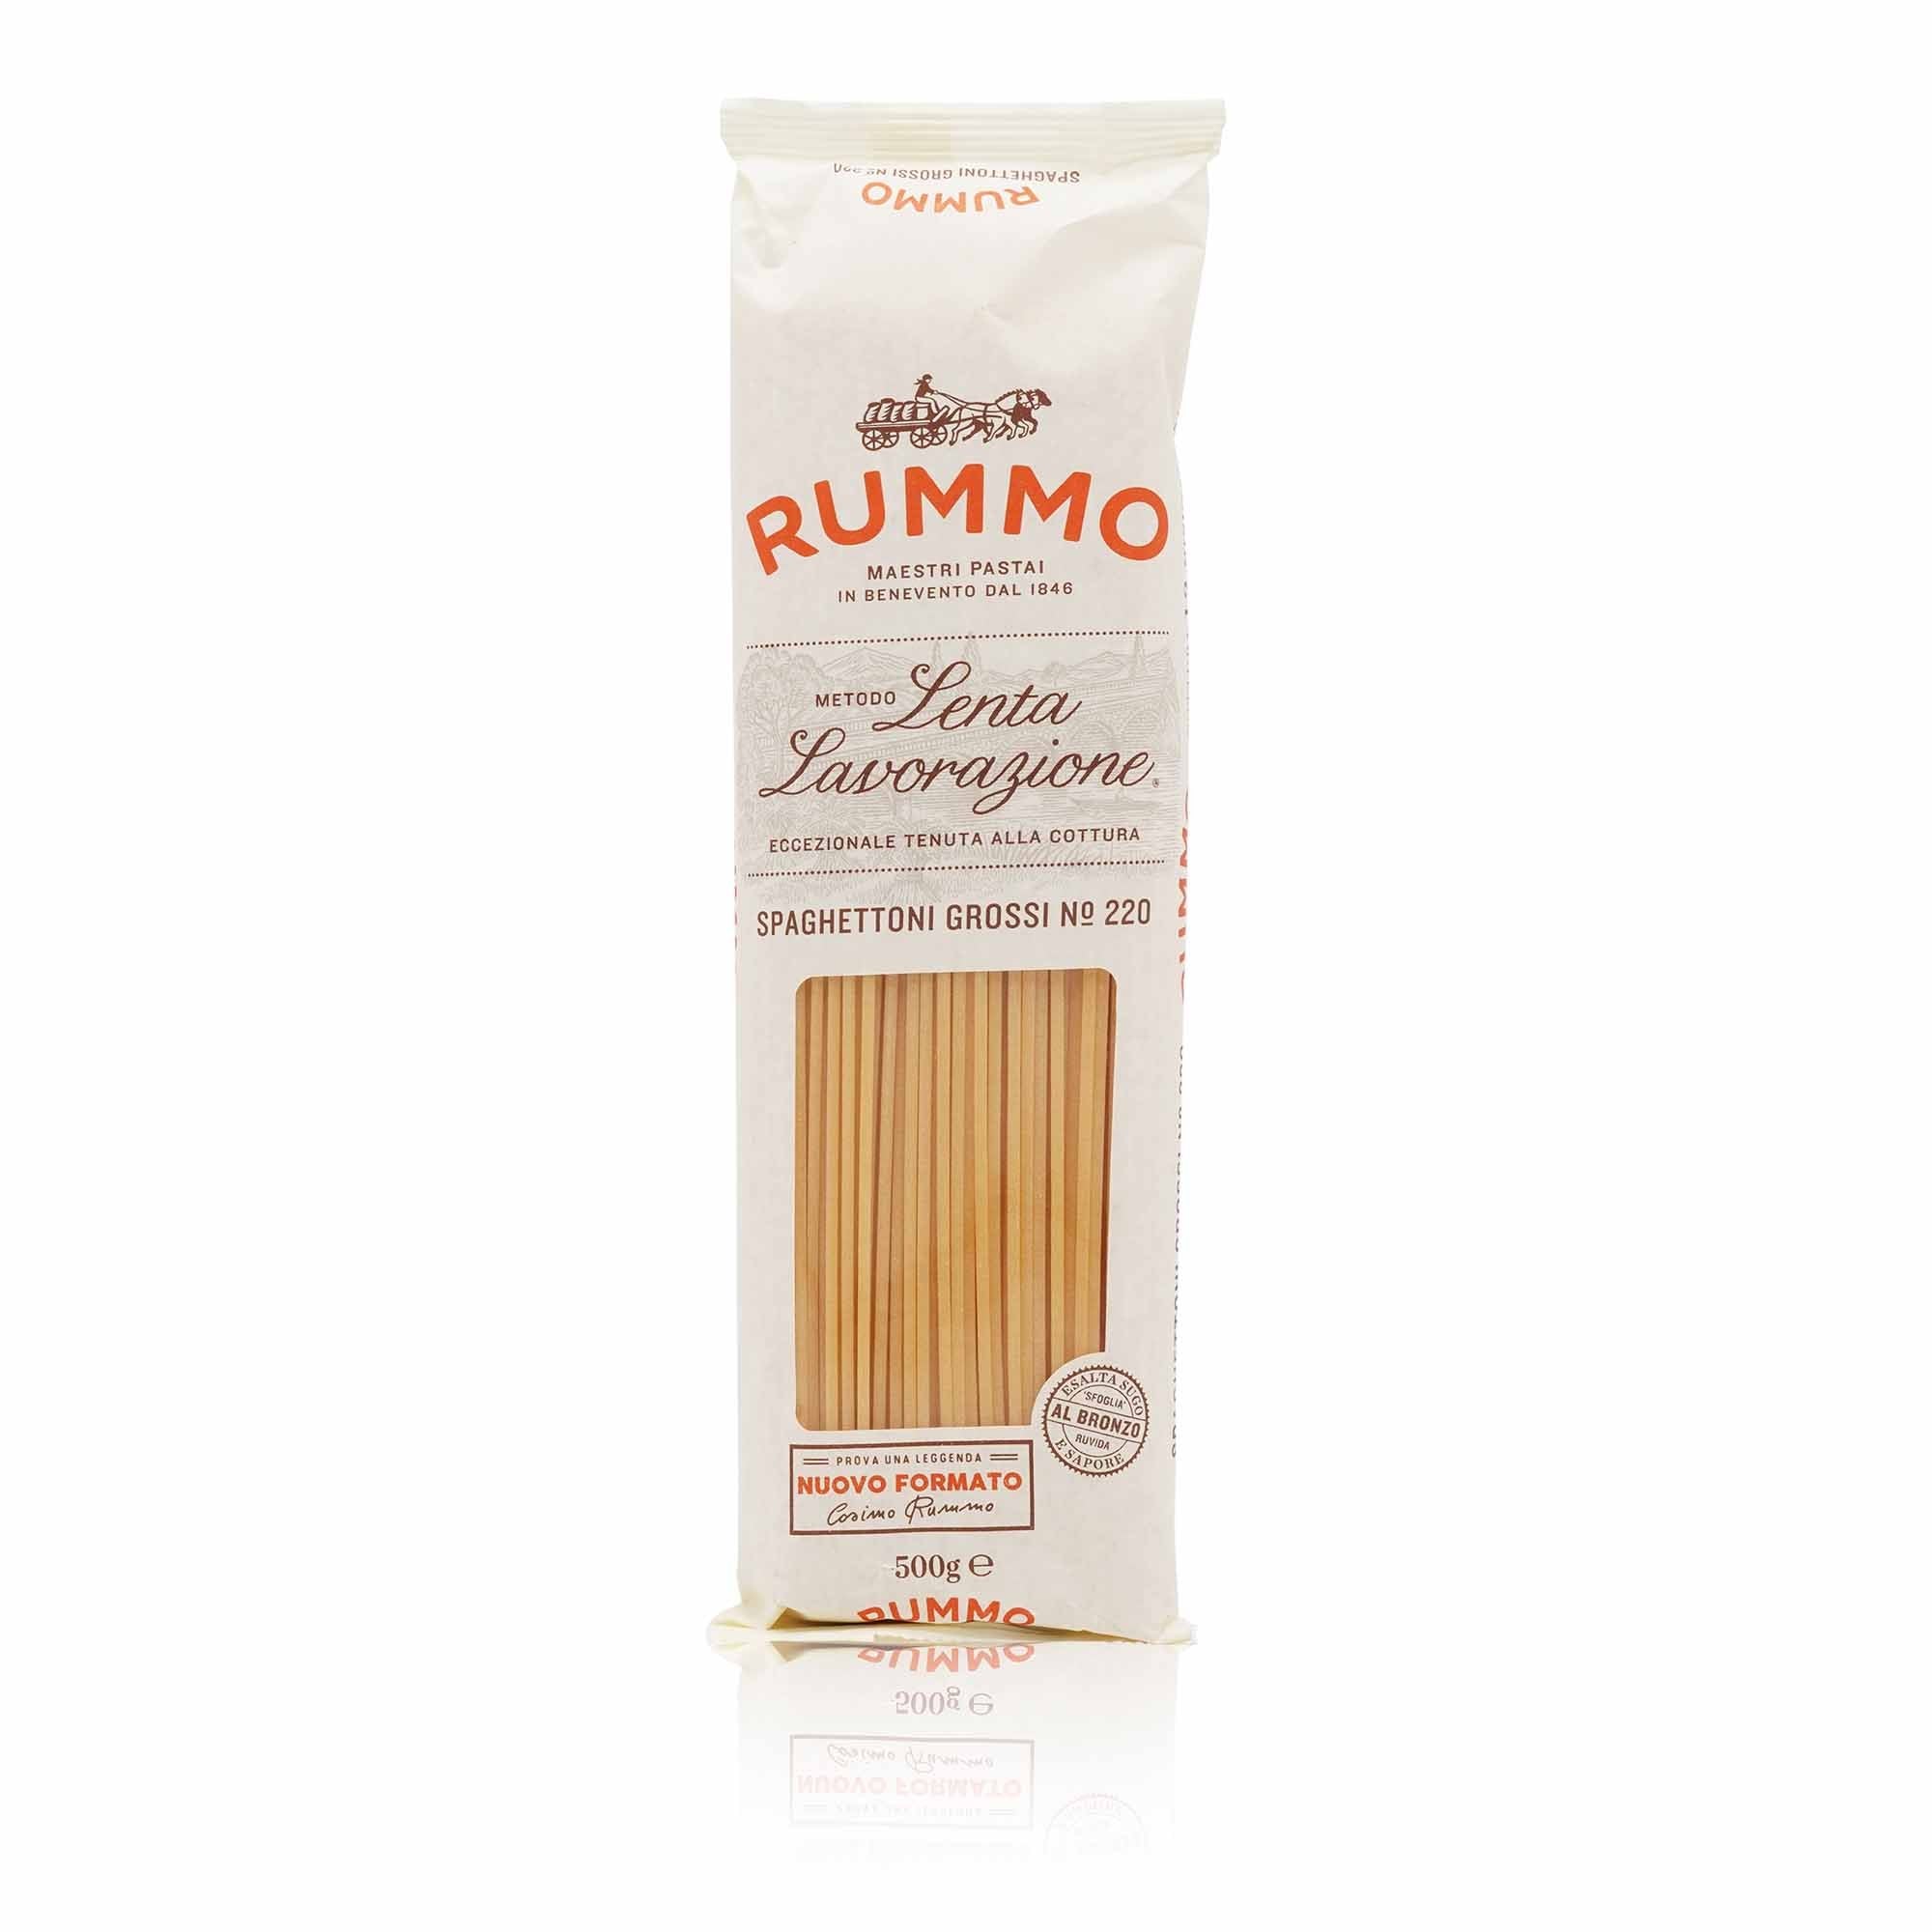 RUMMO Spaghettoni Grossi N° 220 – Spaghettoni dick Nr.220 - 0,5kg